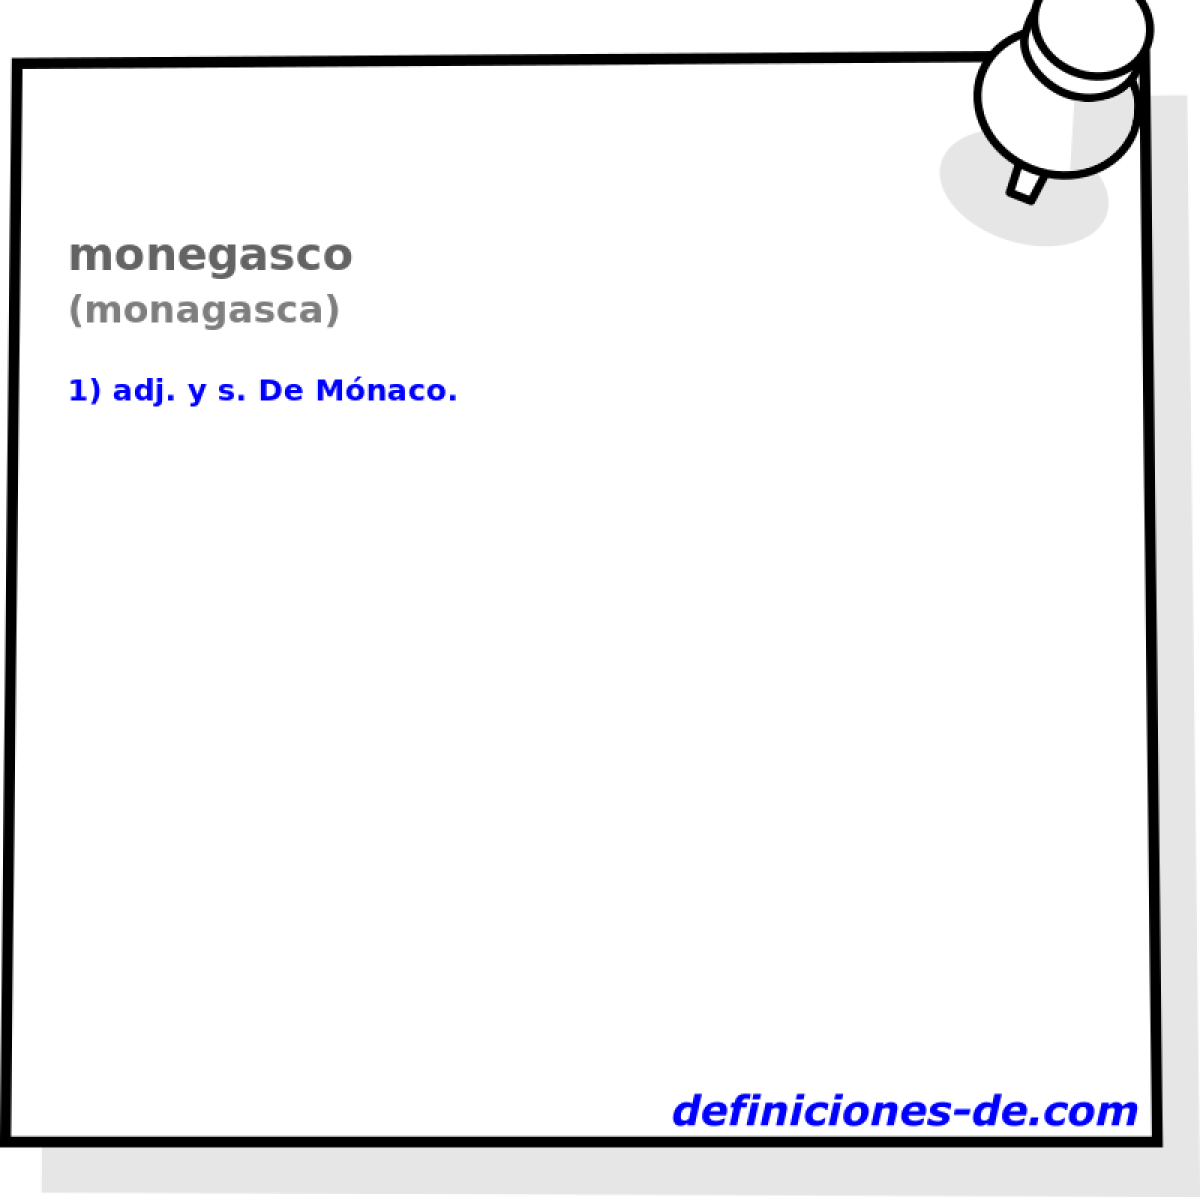 monegasco (monagasca)